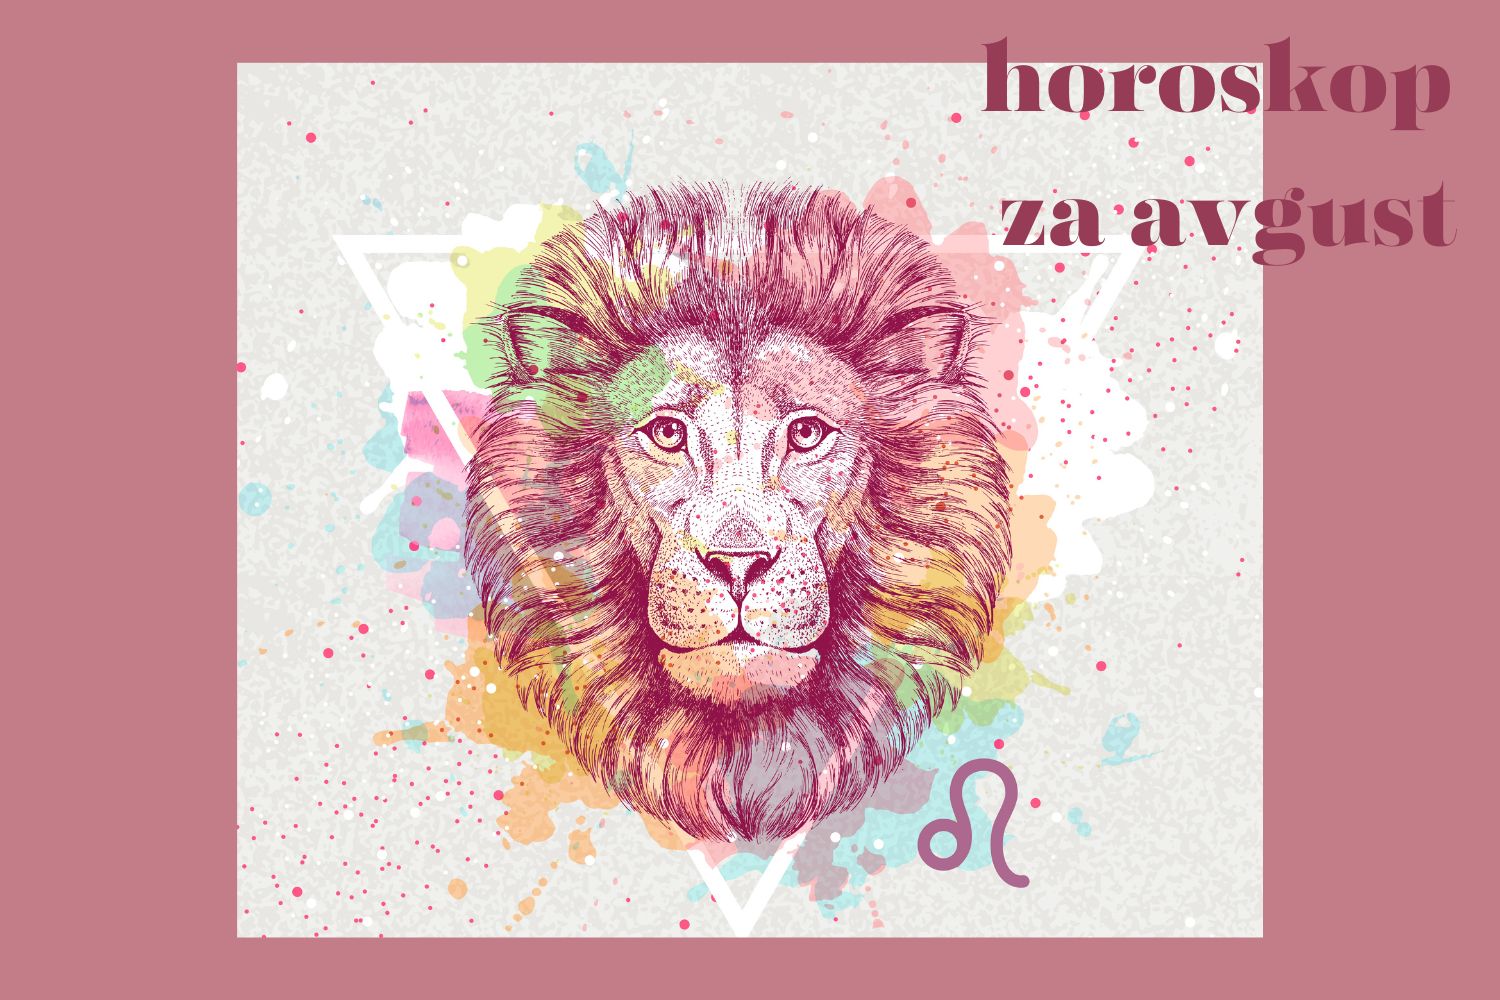 Horoskop za avgust donosi astrološkinja Helena Cupać!